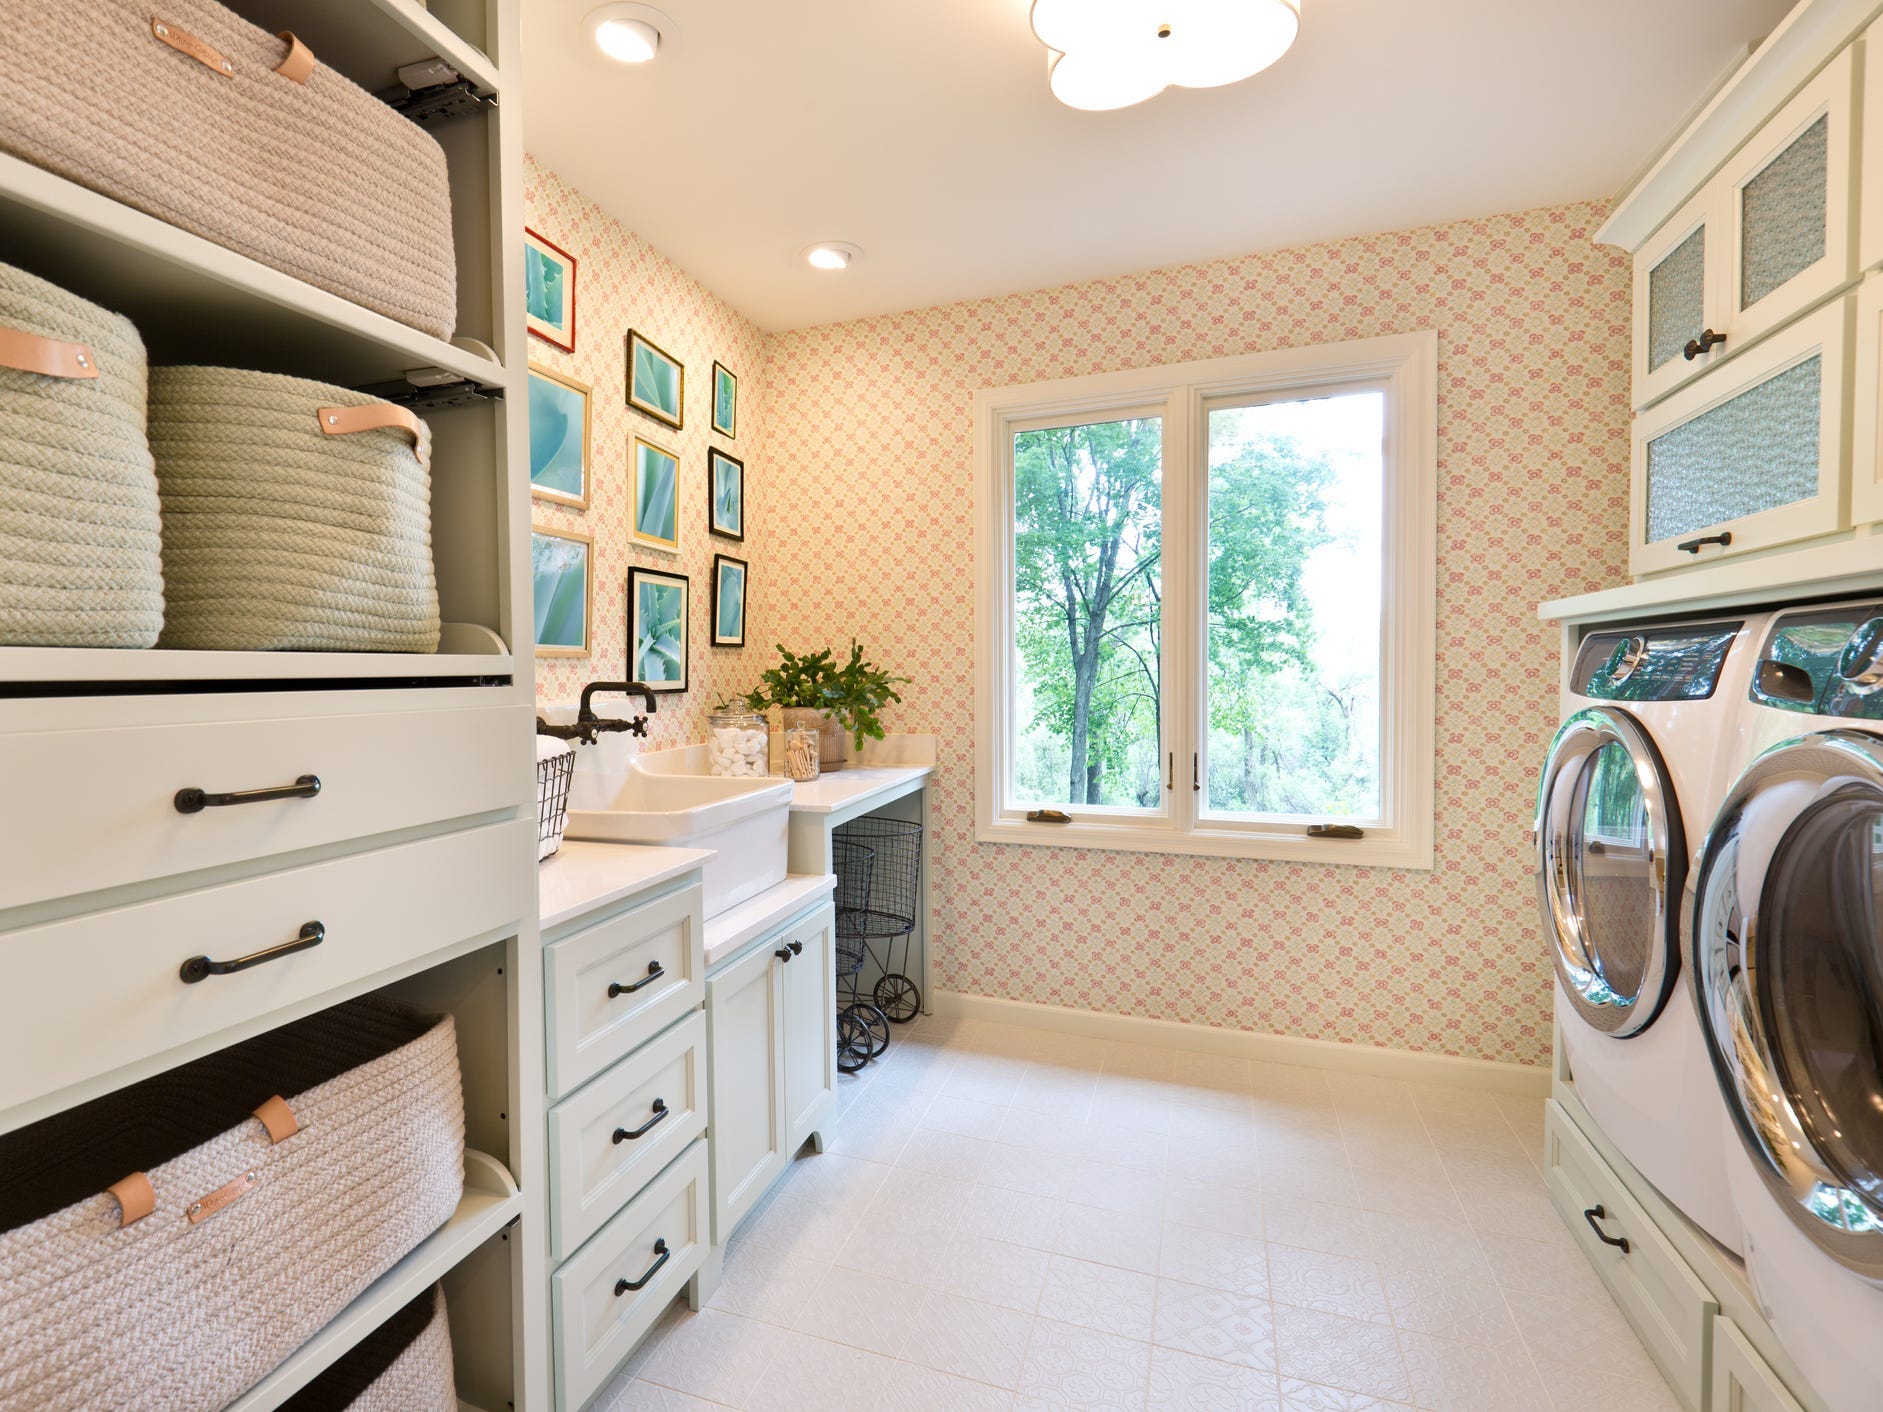 55 Laundry Room Ideas That'll Make Doing Laundry a Joy